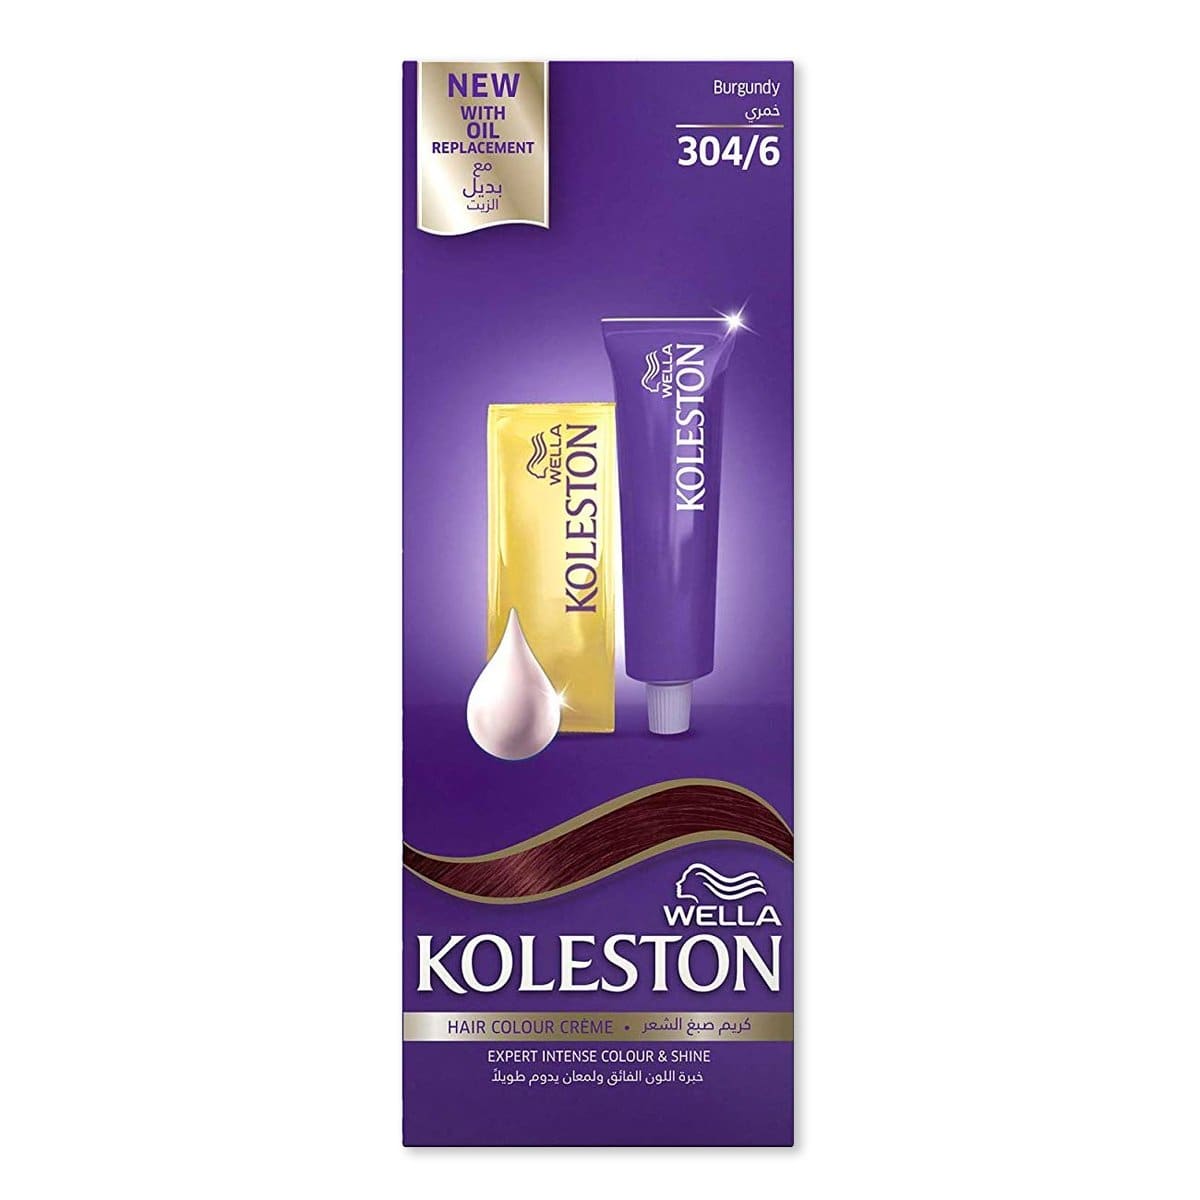 Wella Koleston - Hair Colour Cream 304/6 Burgundy - Highfy.pk